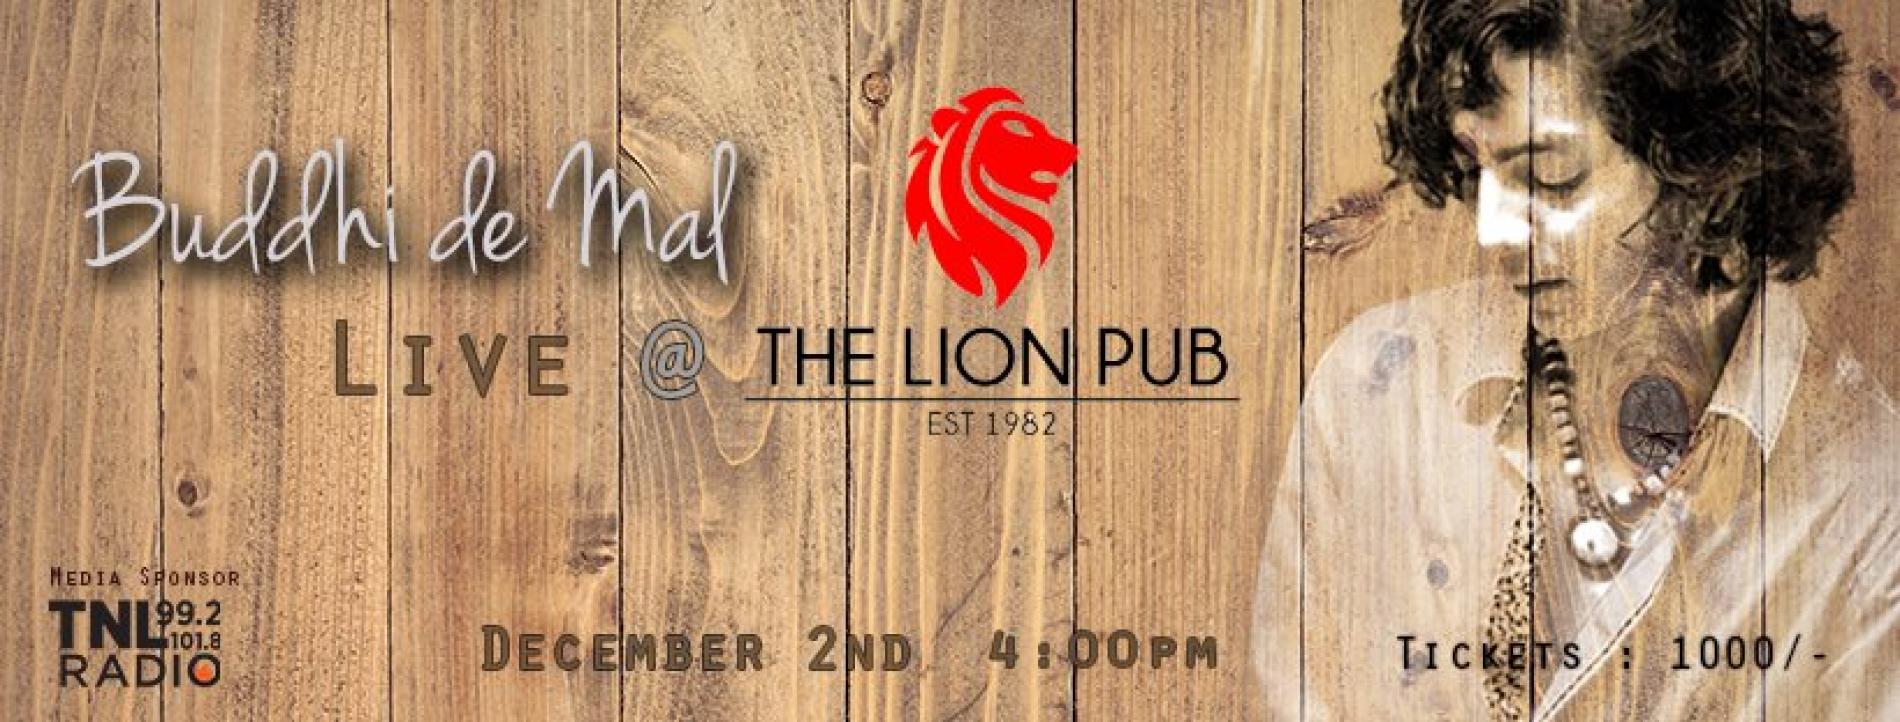 Buddhi De Mal Live At The Lion Pub